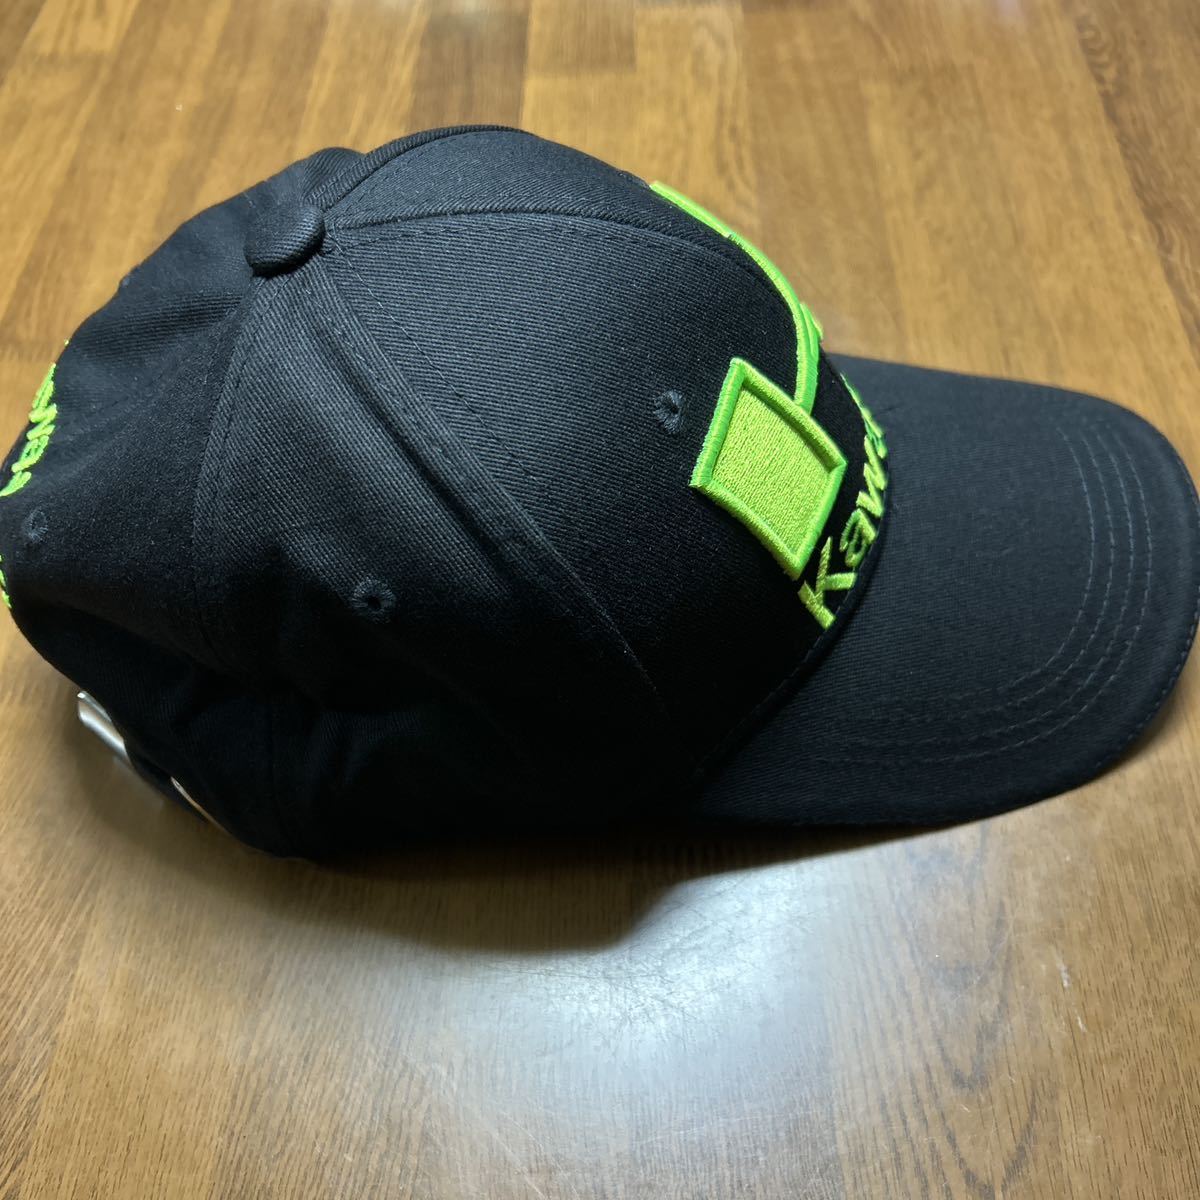  Kawasaki колпак шляпа вышивка Logo новый товар 